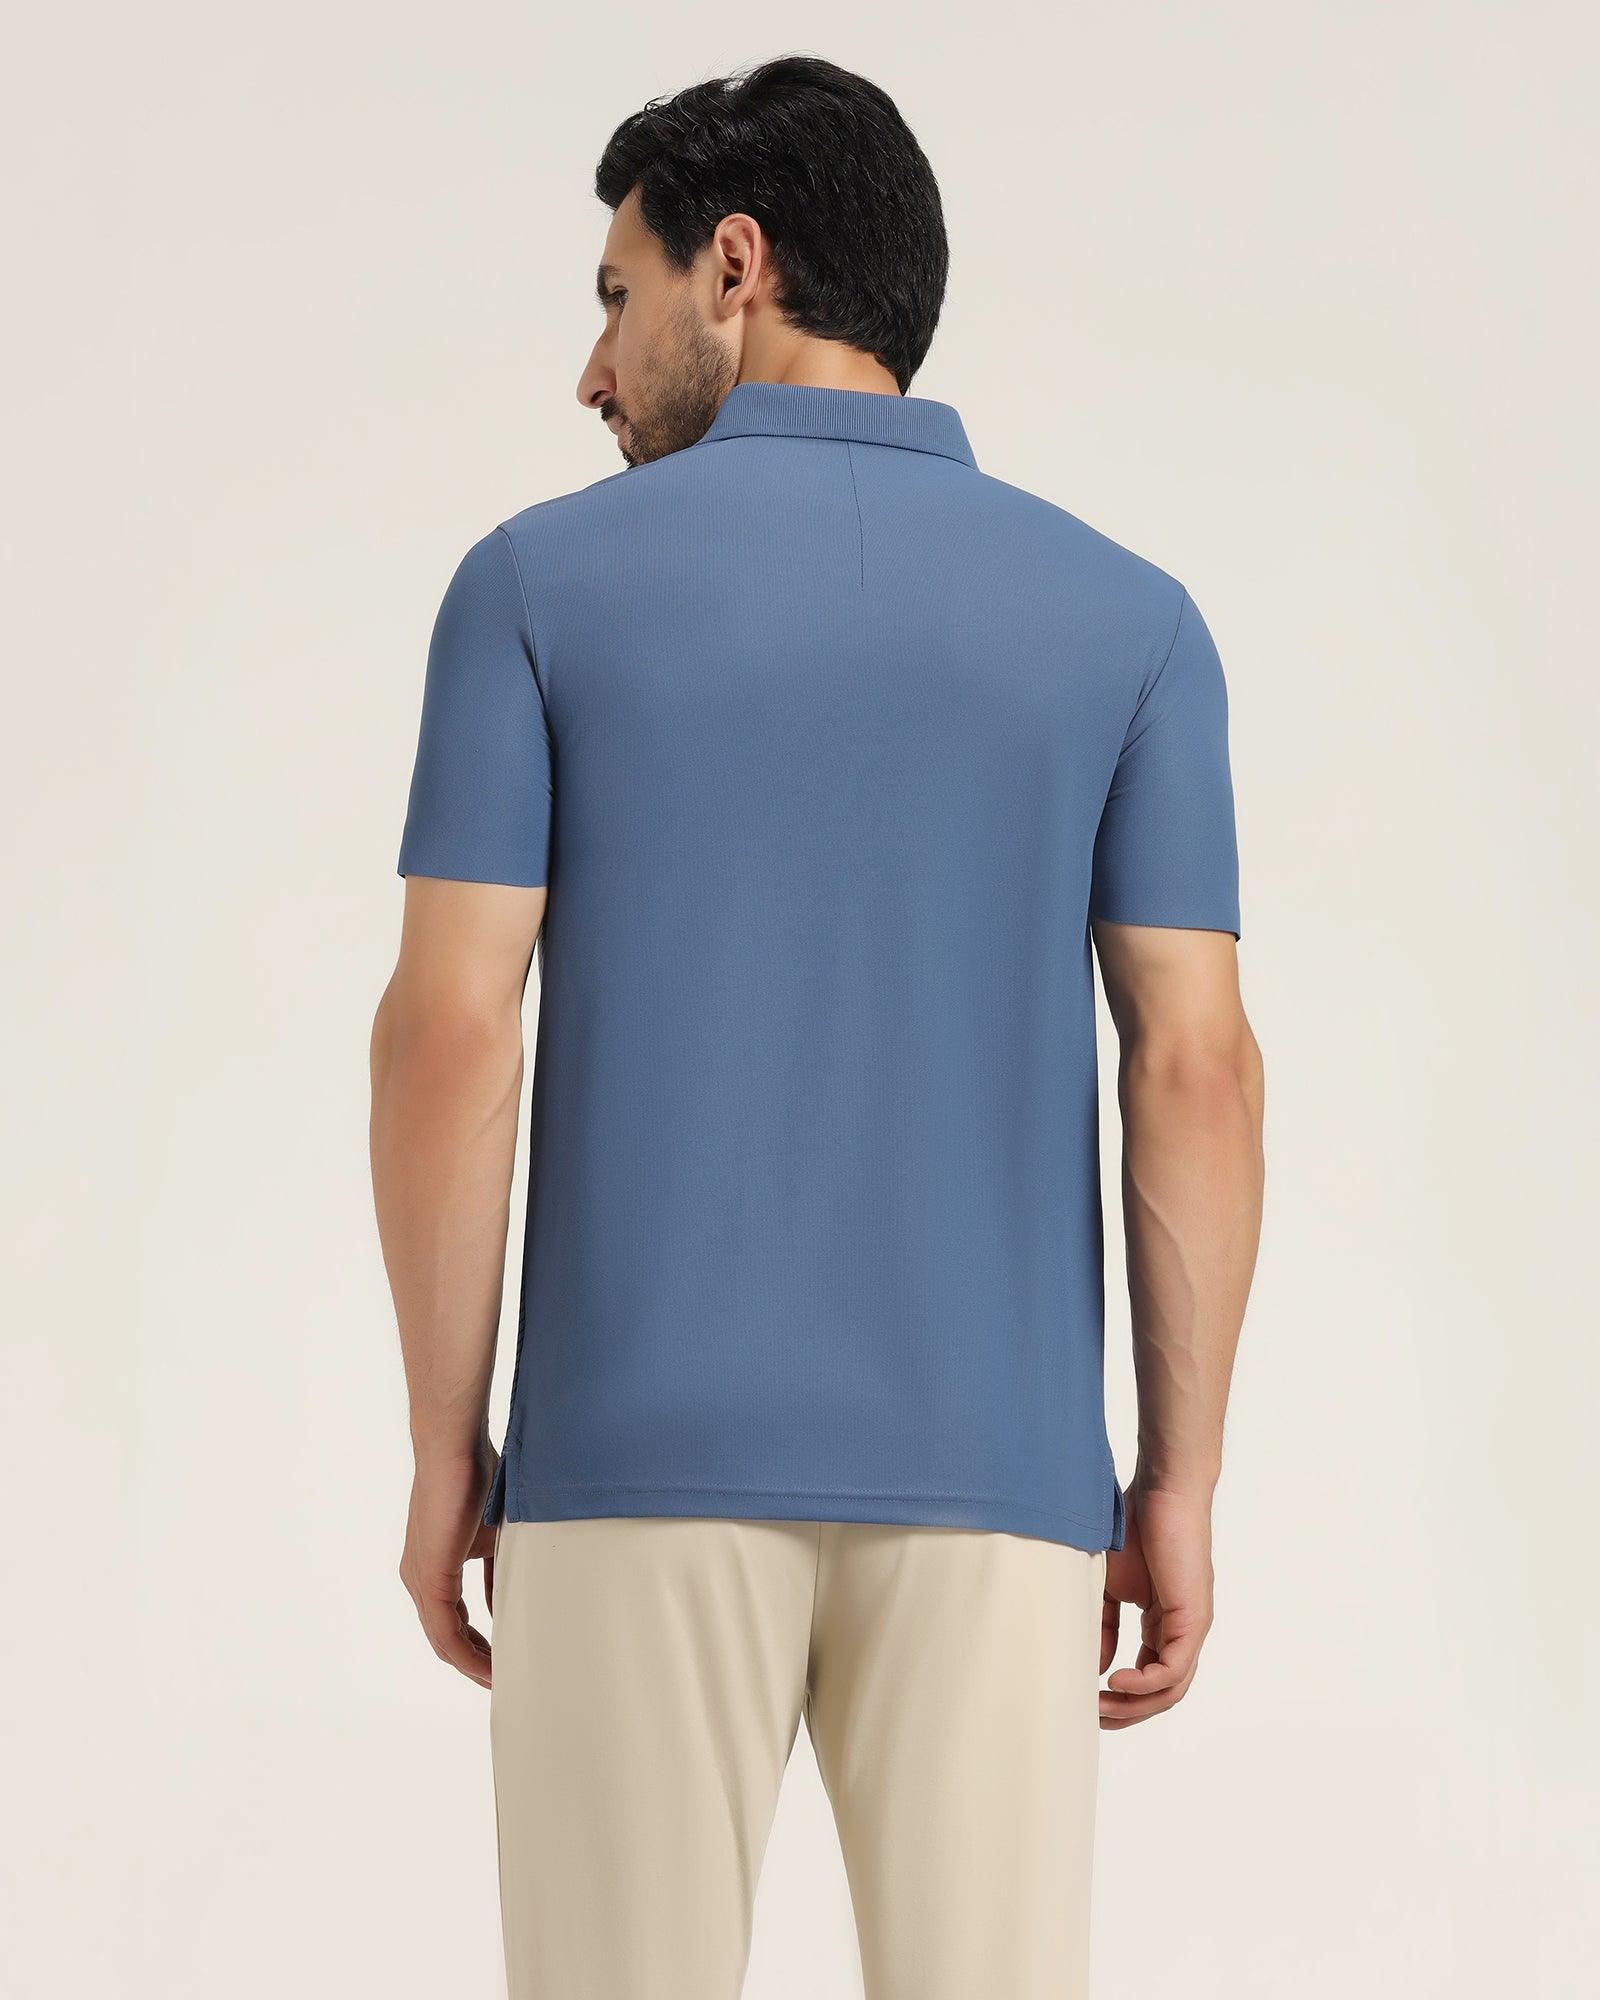 TechPro Polo Blue Solid T Shirt - Walker